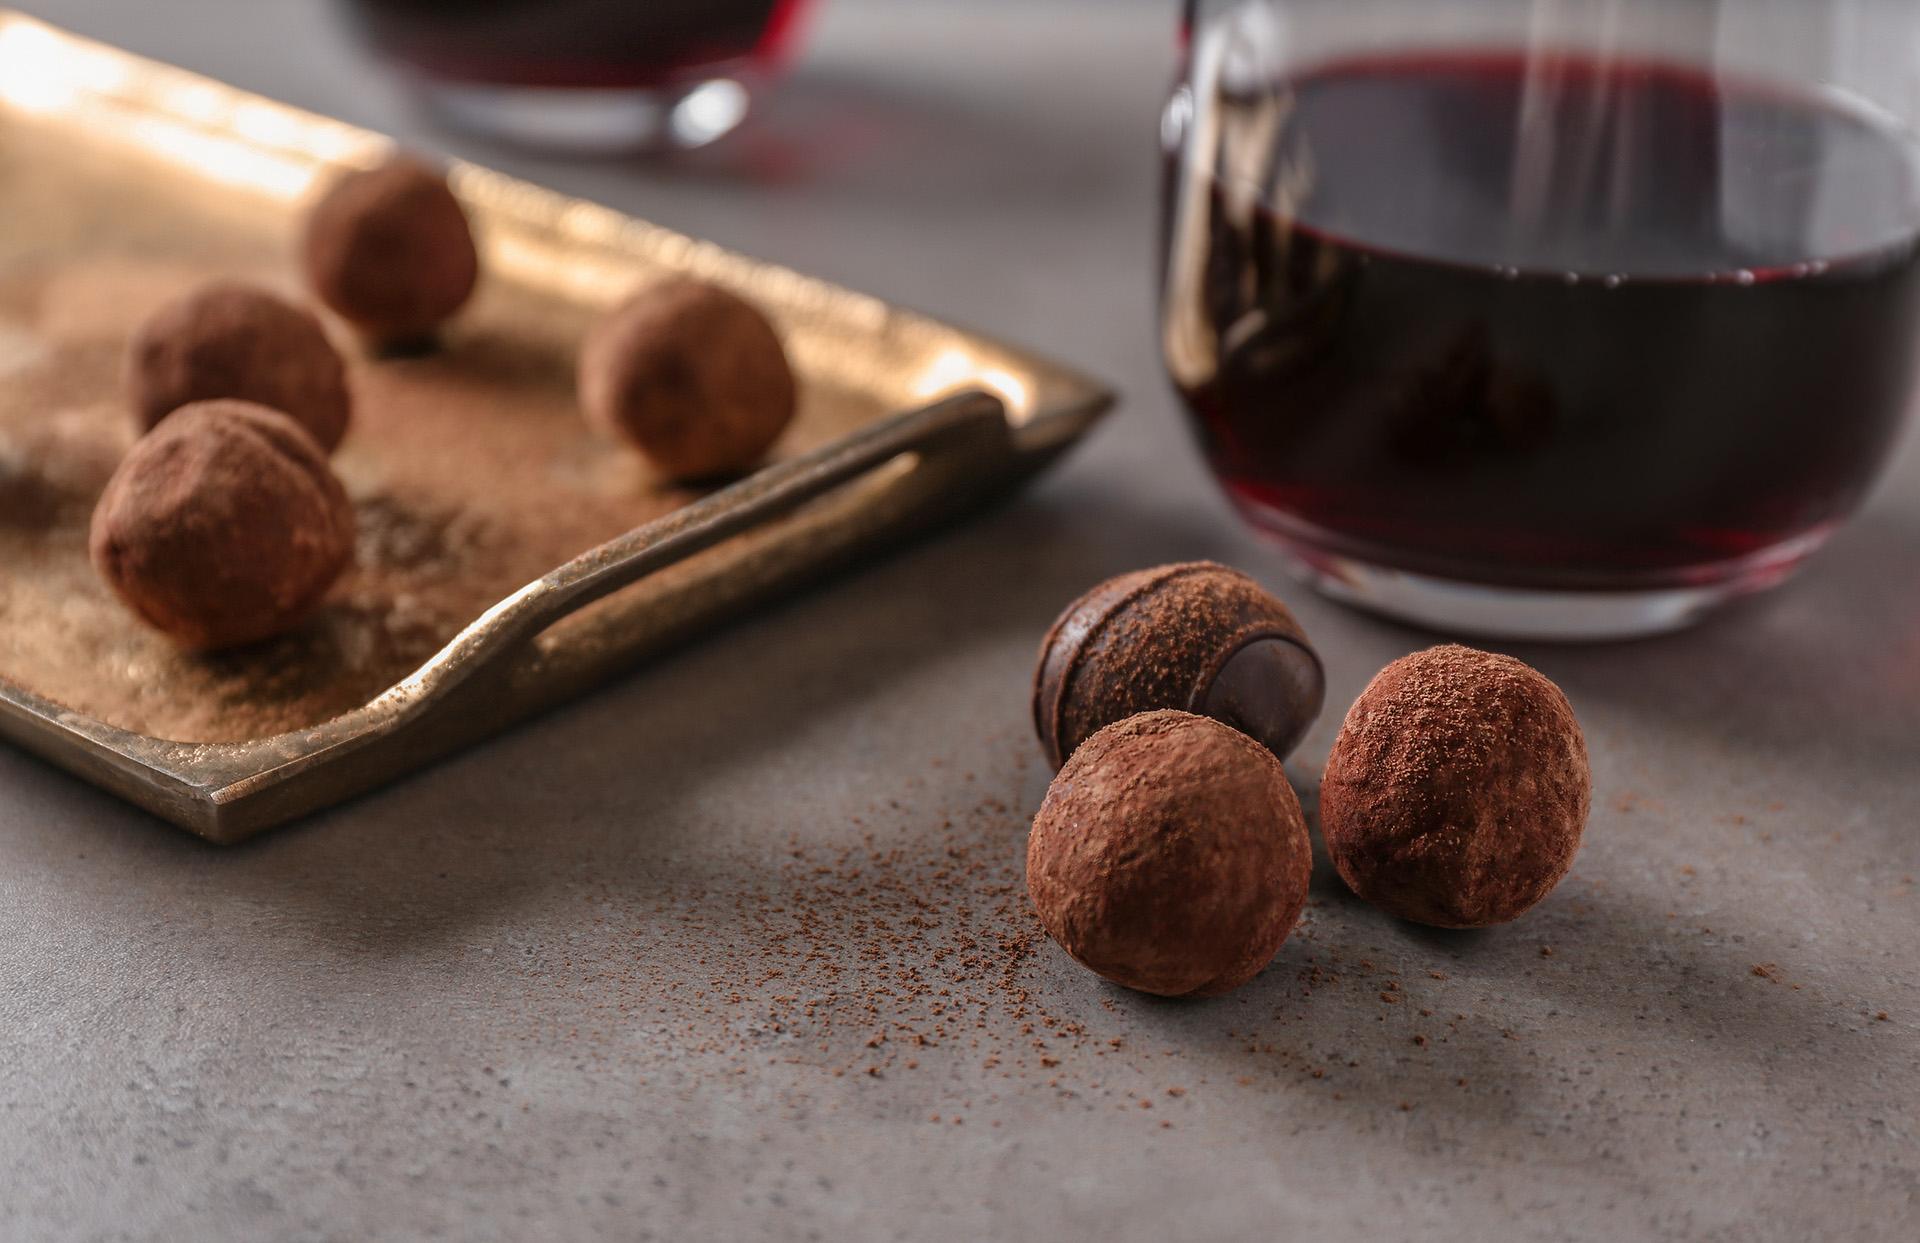 Chocolate truffle and red wine